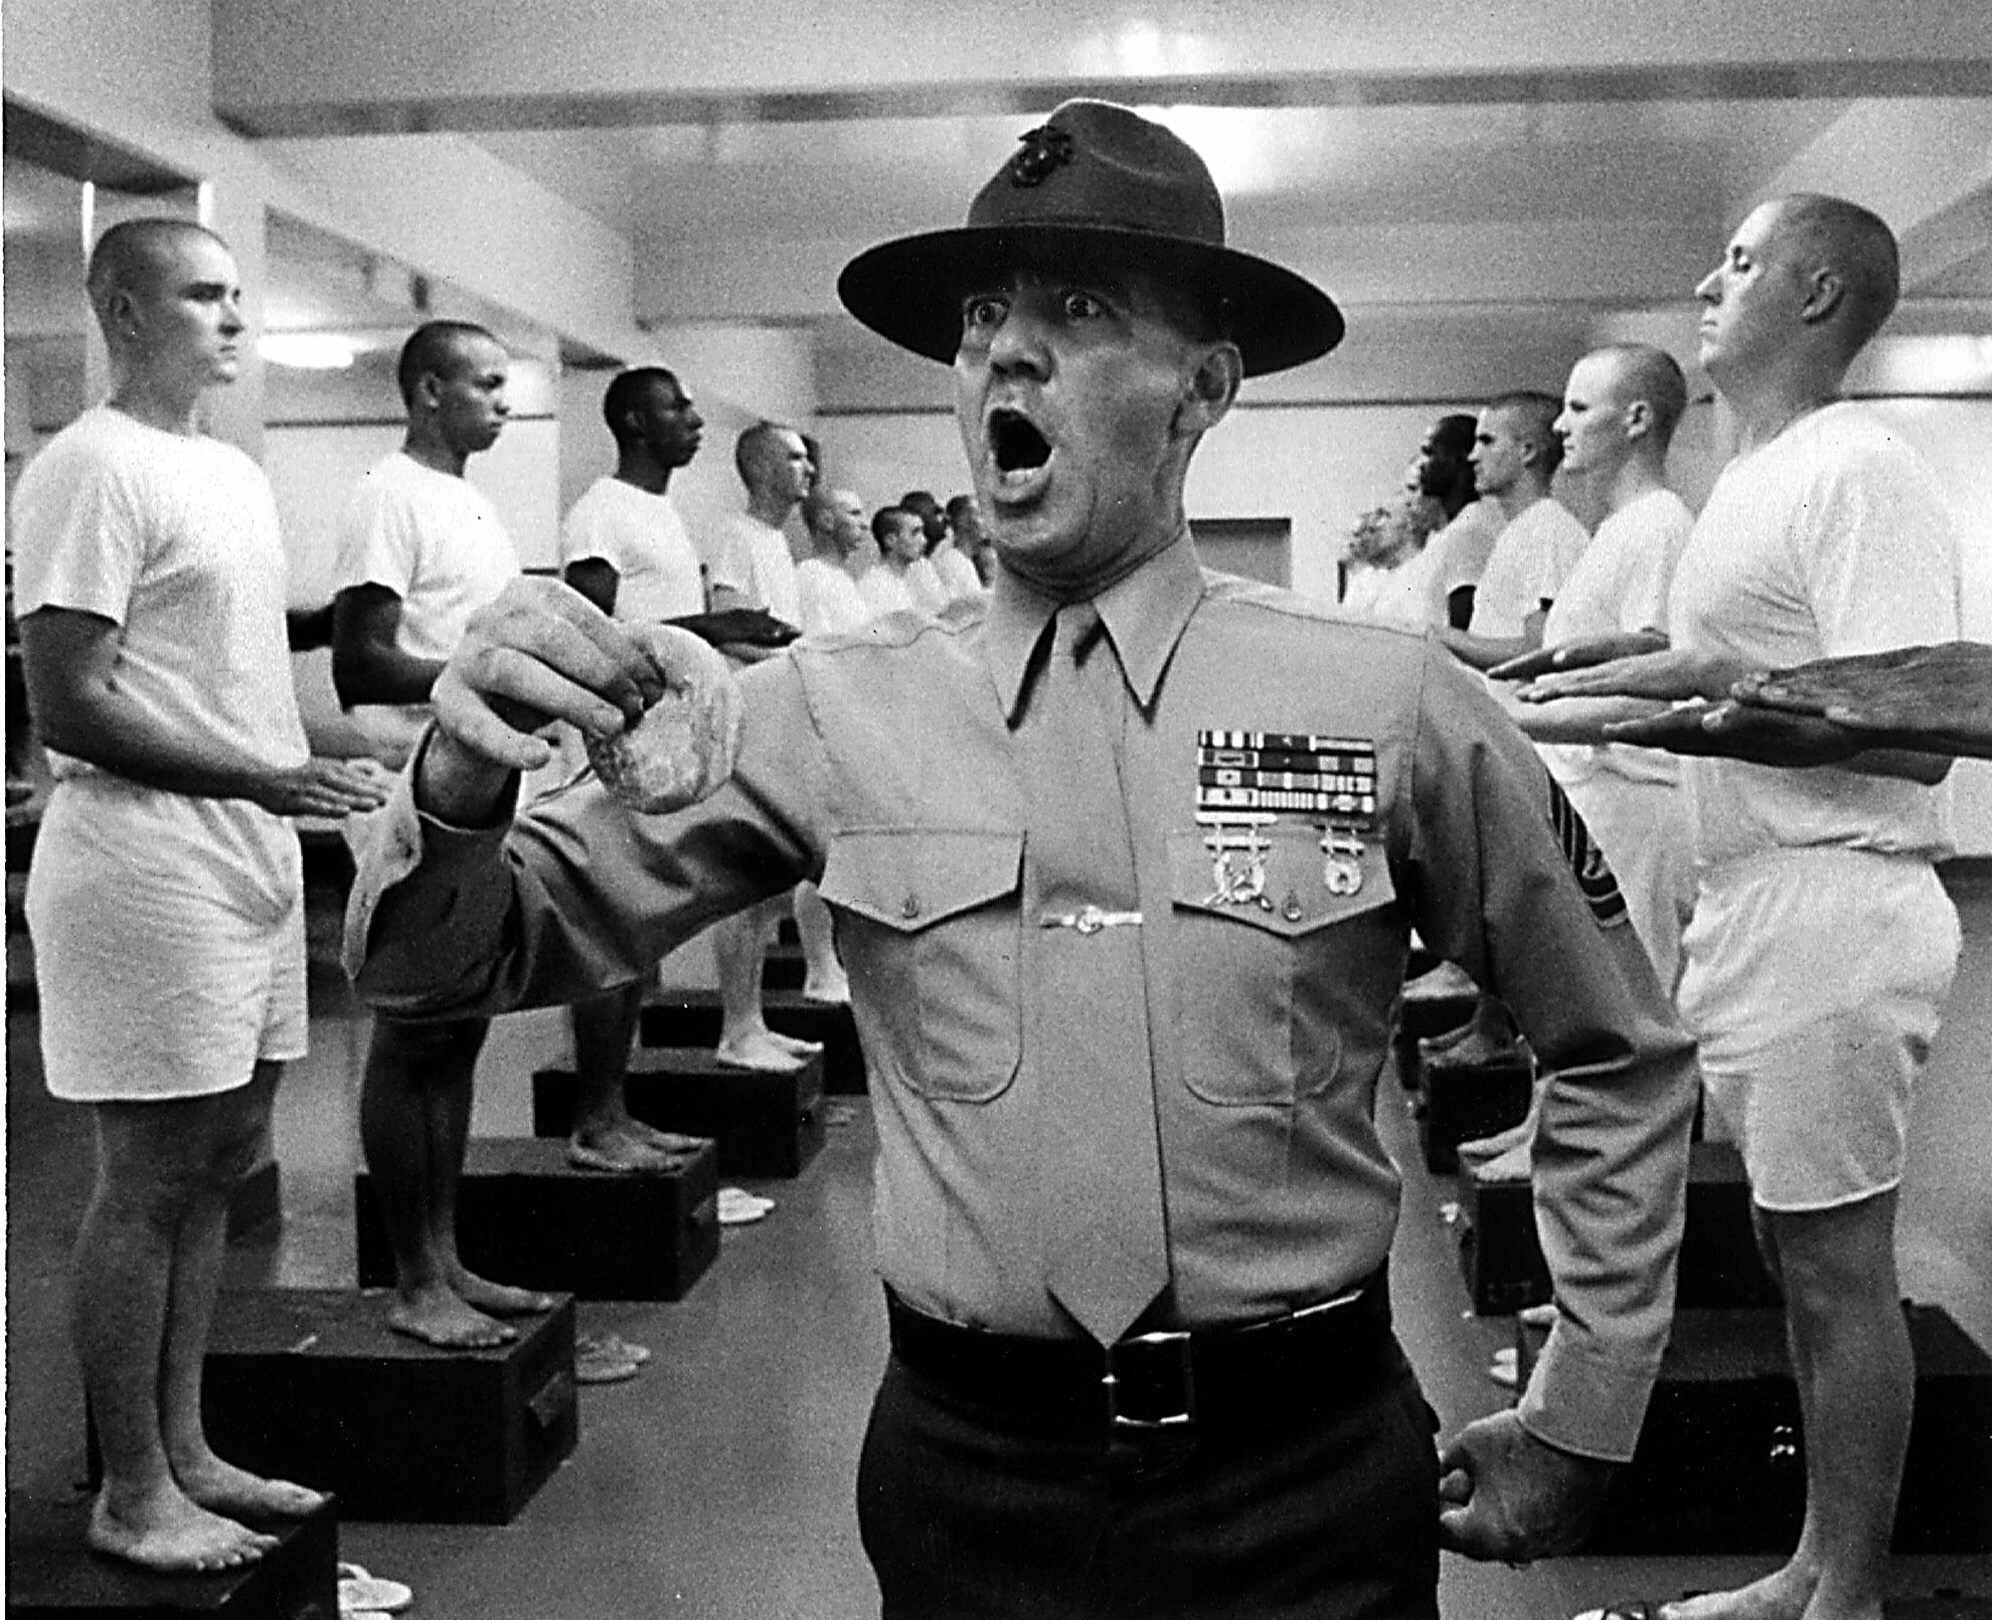 California road to honor Marine icon R. Lee Ermey, play 'The Marines' Hymn'